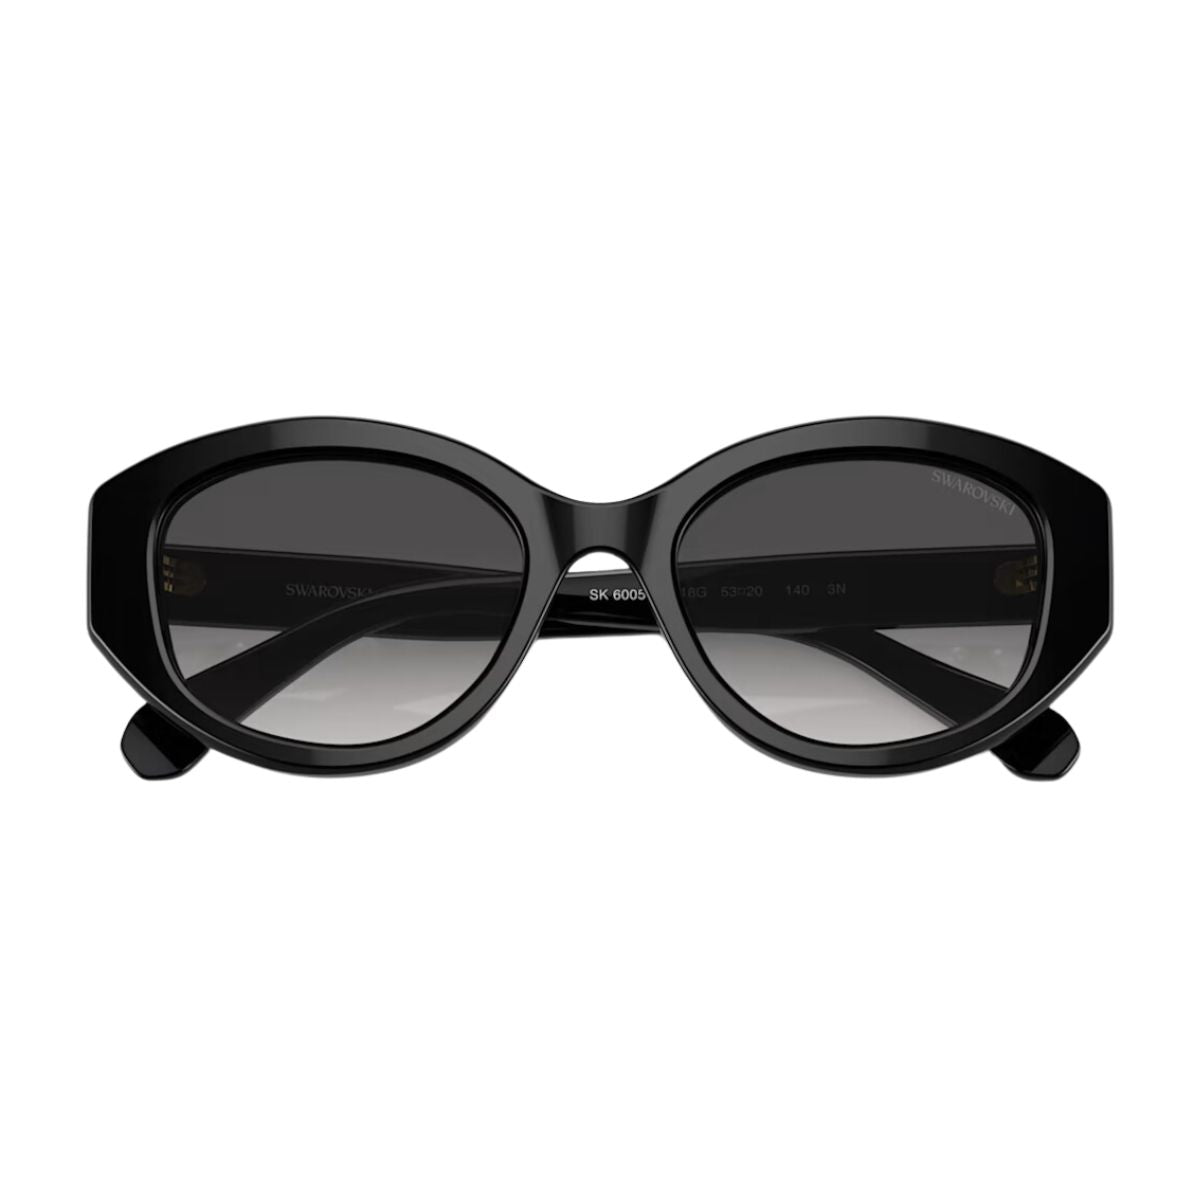 "Shop Stylish Swarovski Eyewear Sun Goggles For Women's At Online"